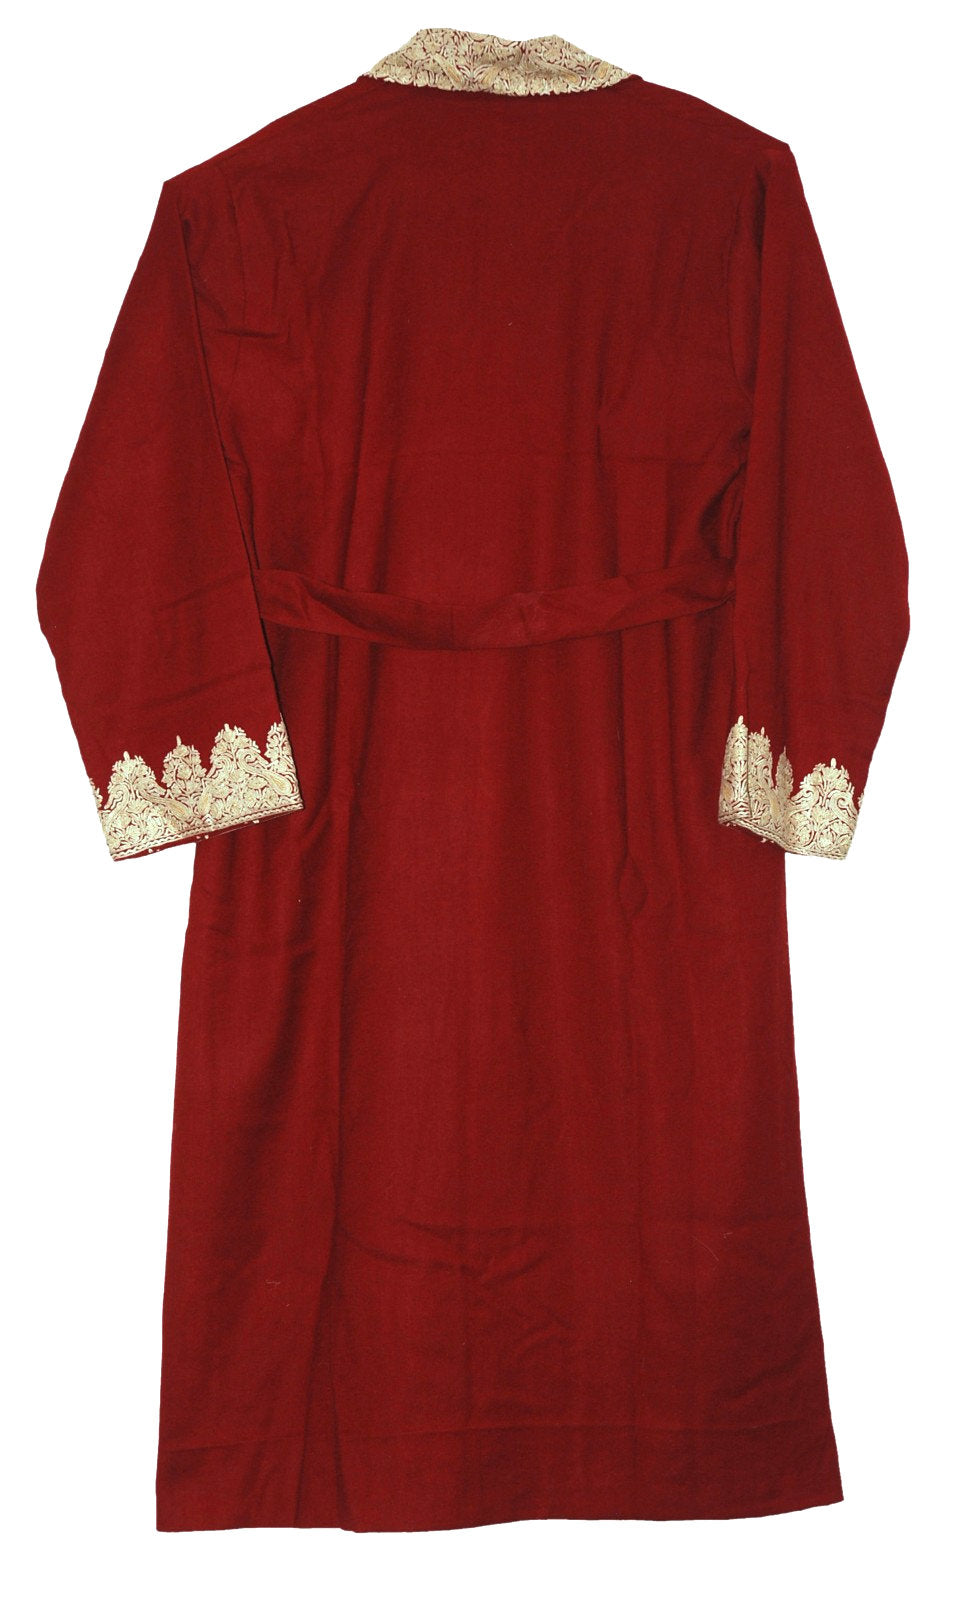 Shop Robe Collection for Lingerie Online | Debenhams Kuwait